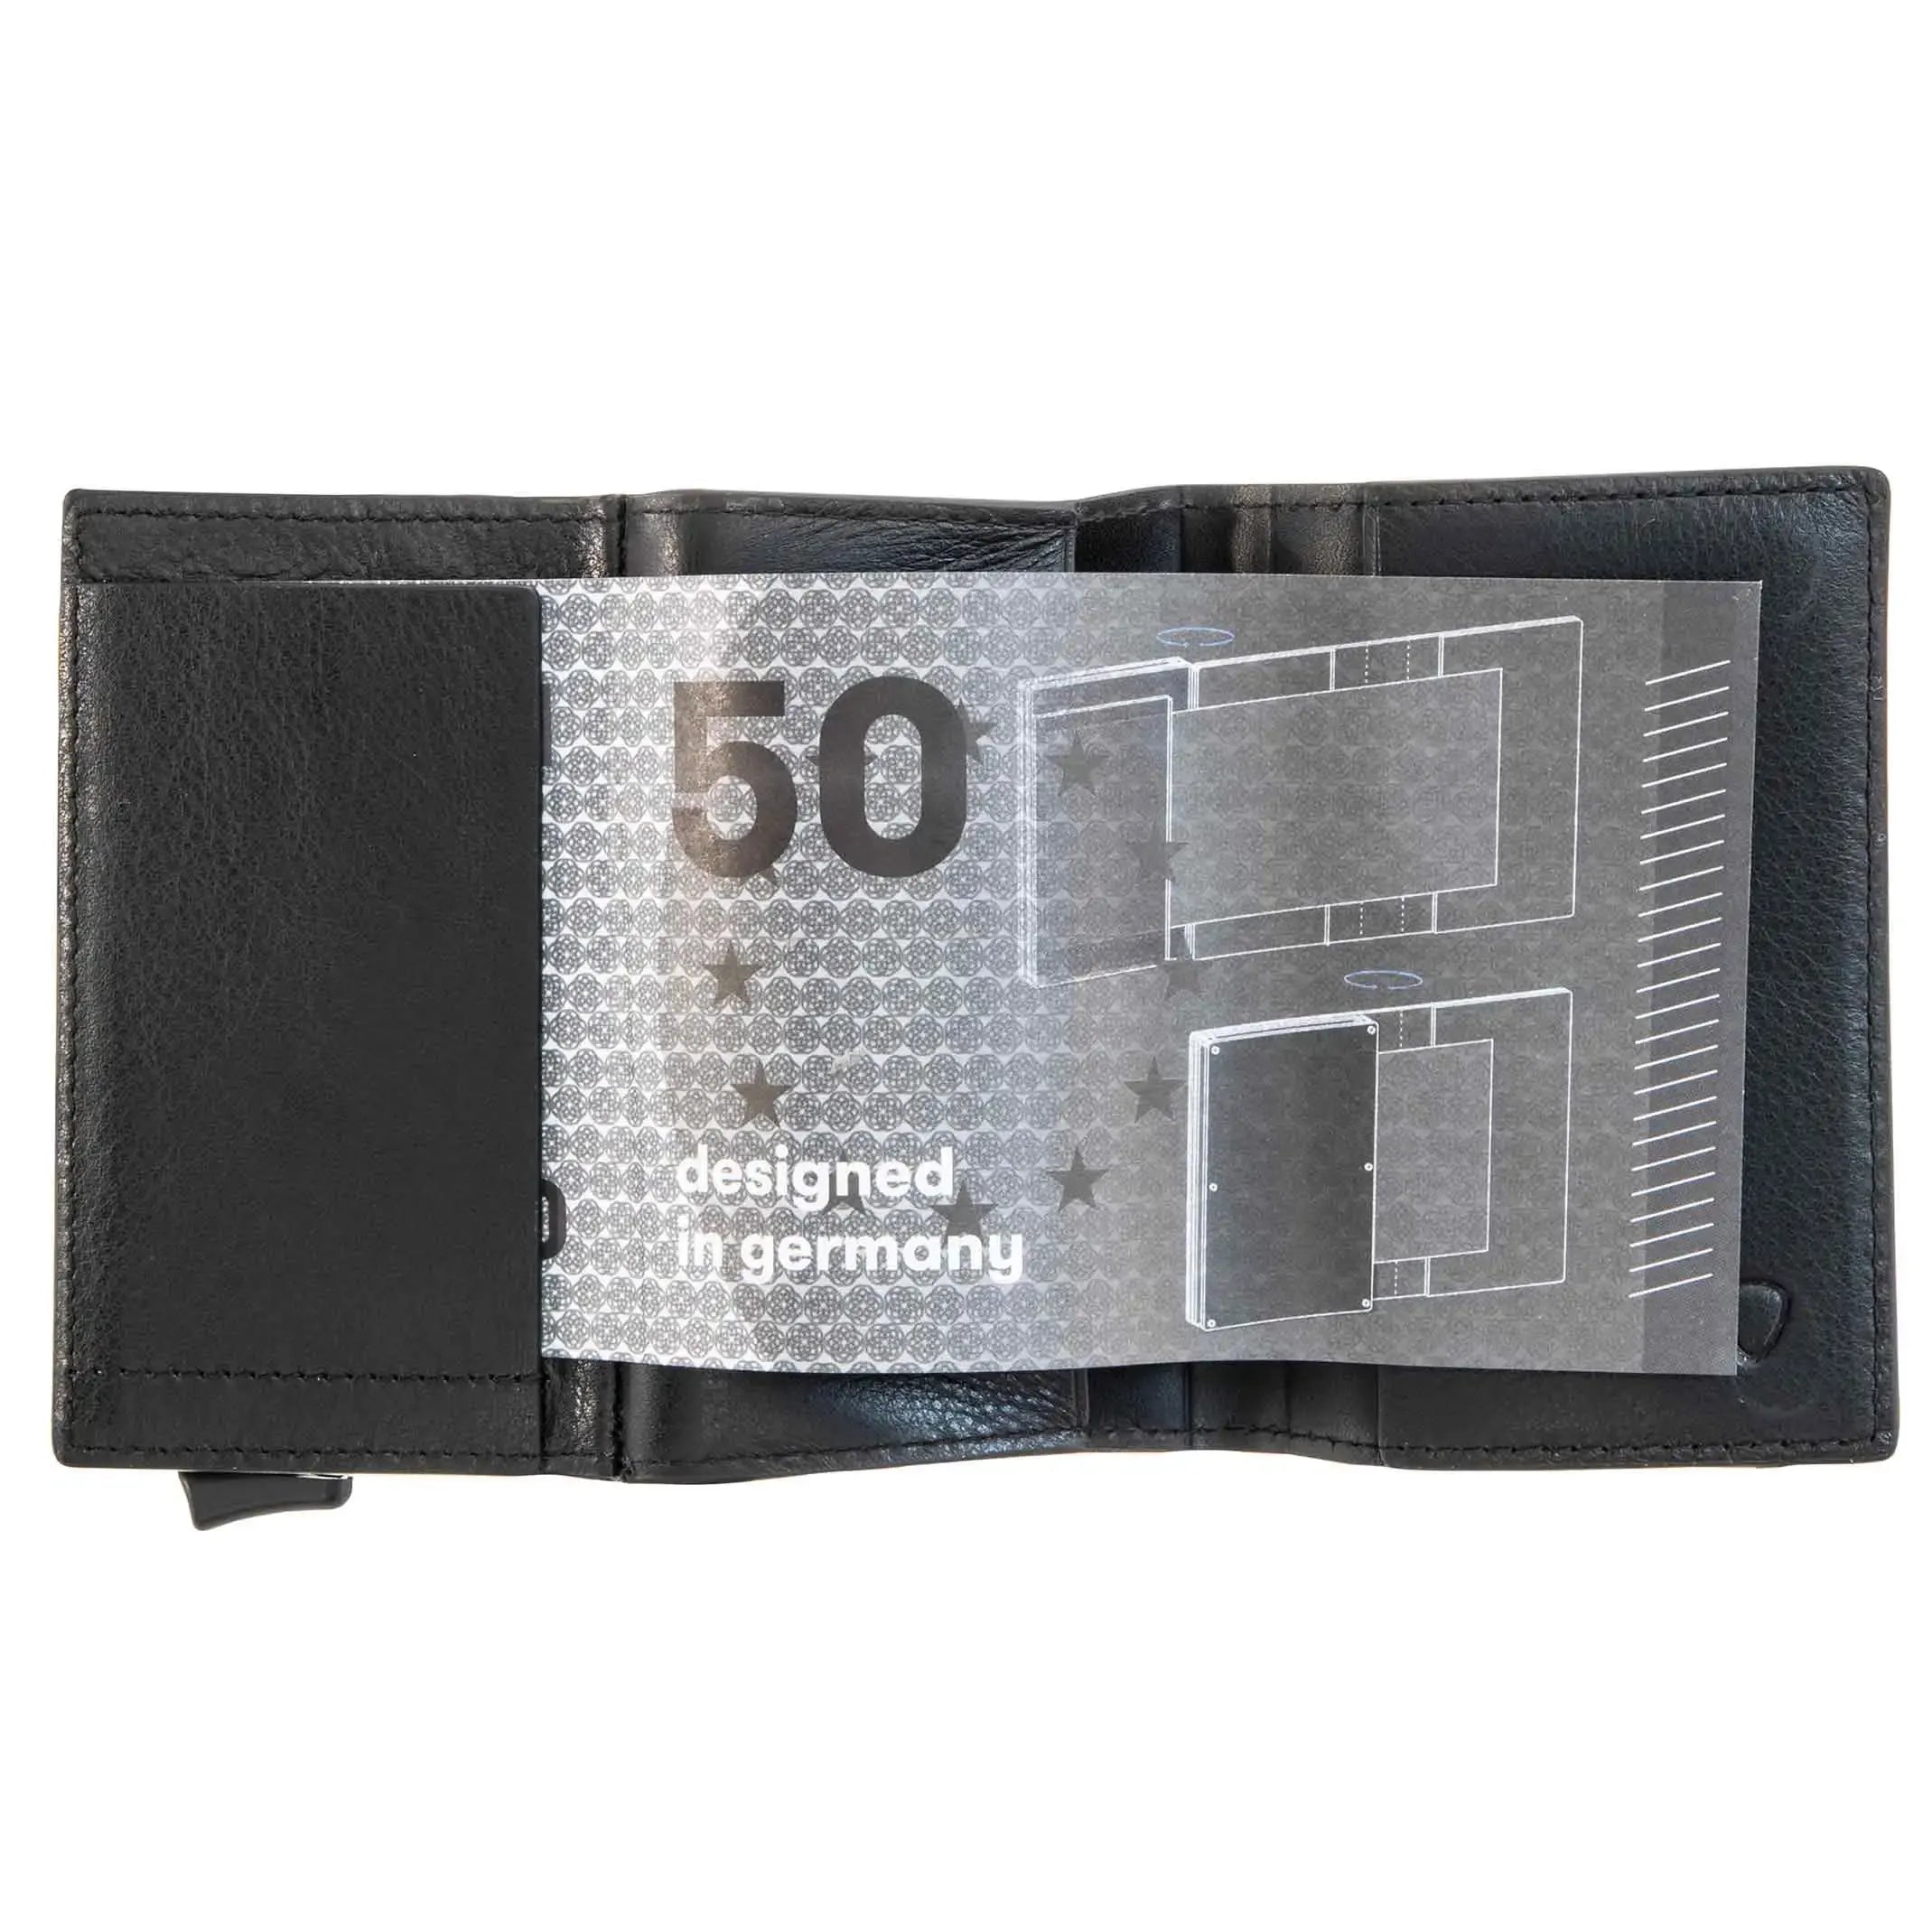 Strellson Carter C-One E-Cage SV8 wallet 10 cm - Black